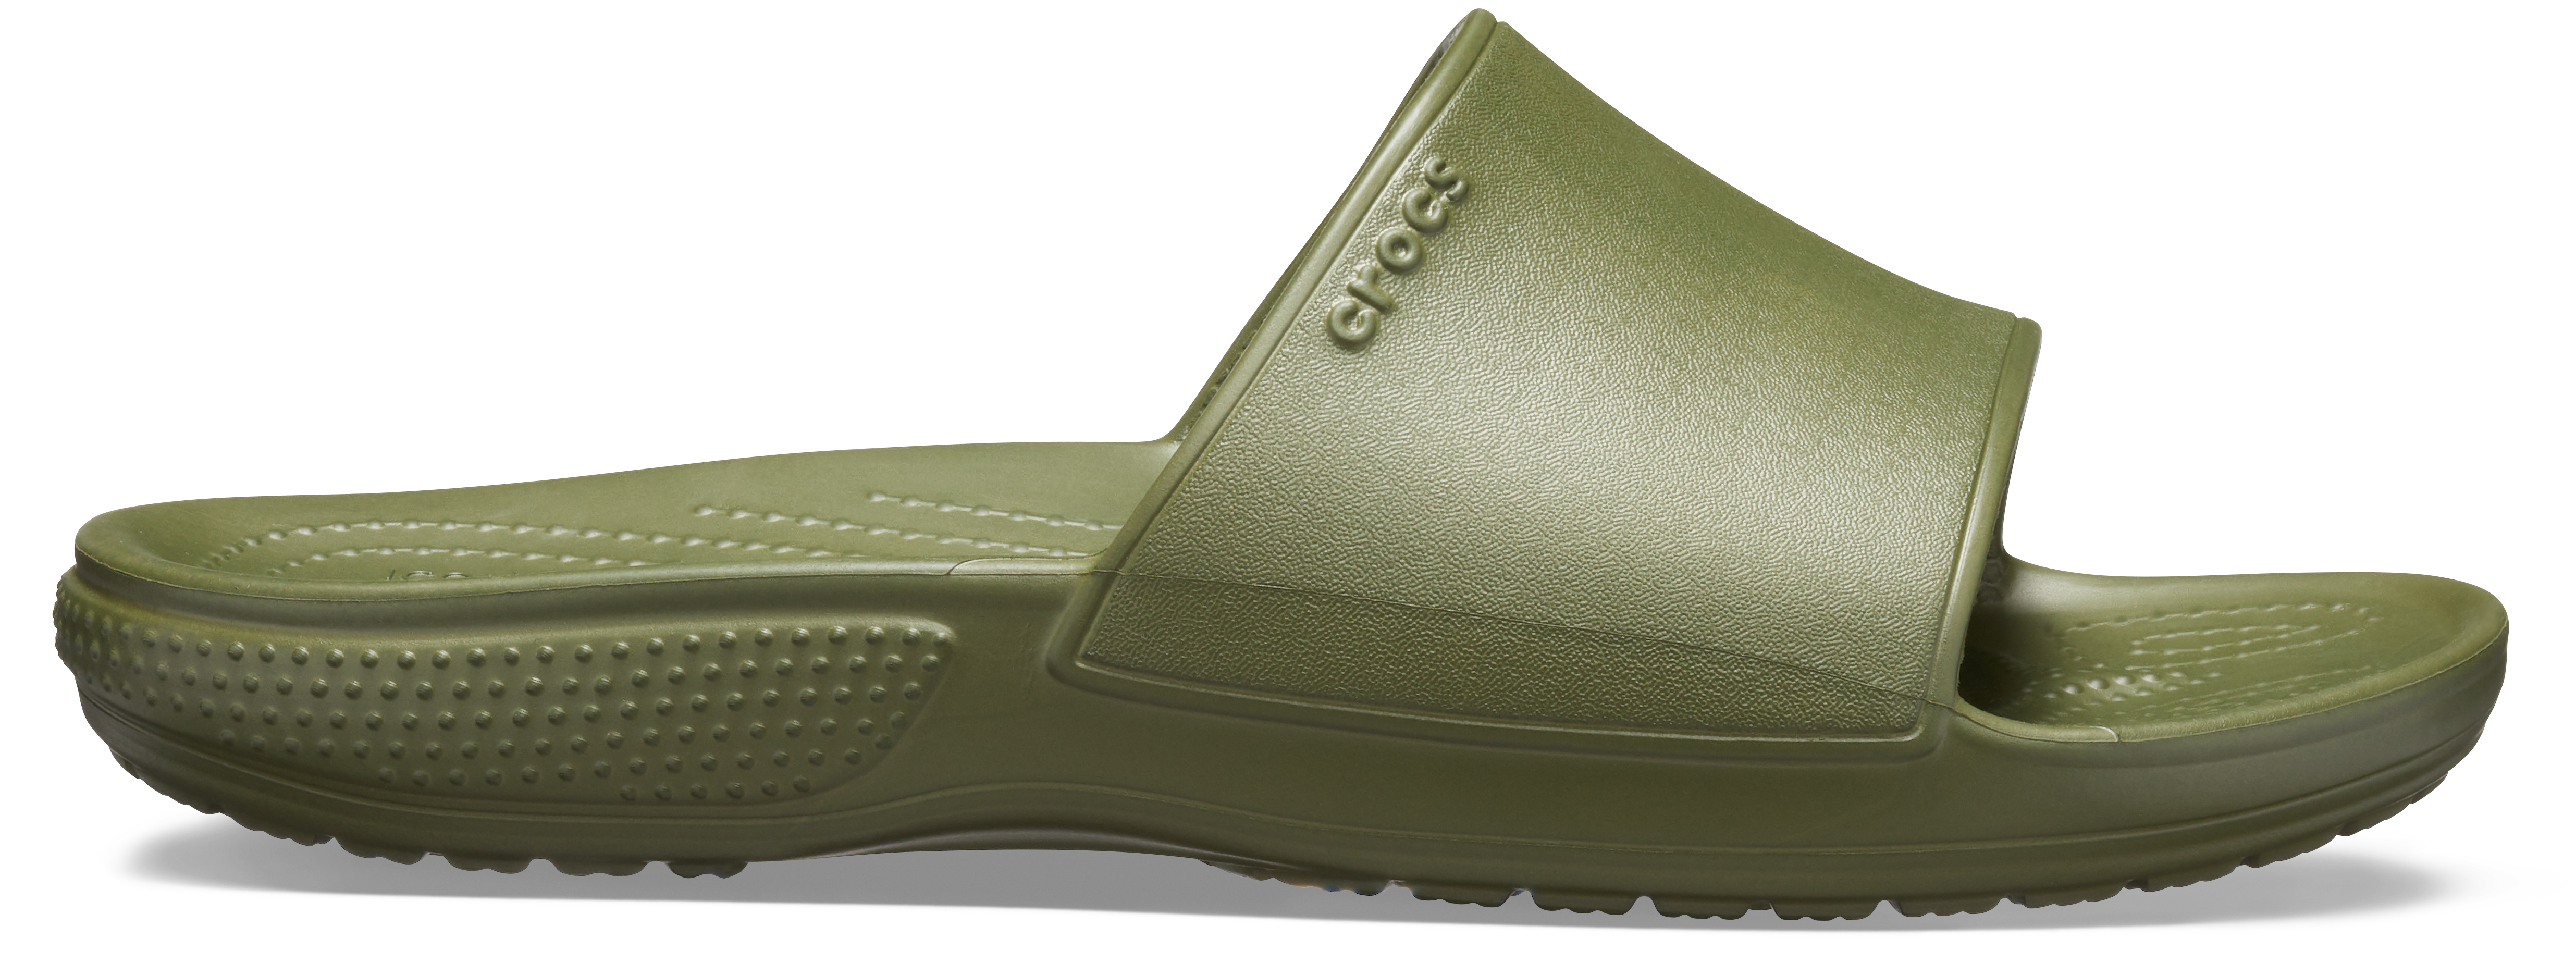 Crocs Unisex Classic II Slide Sandals - image 3 of 6